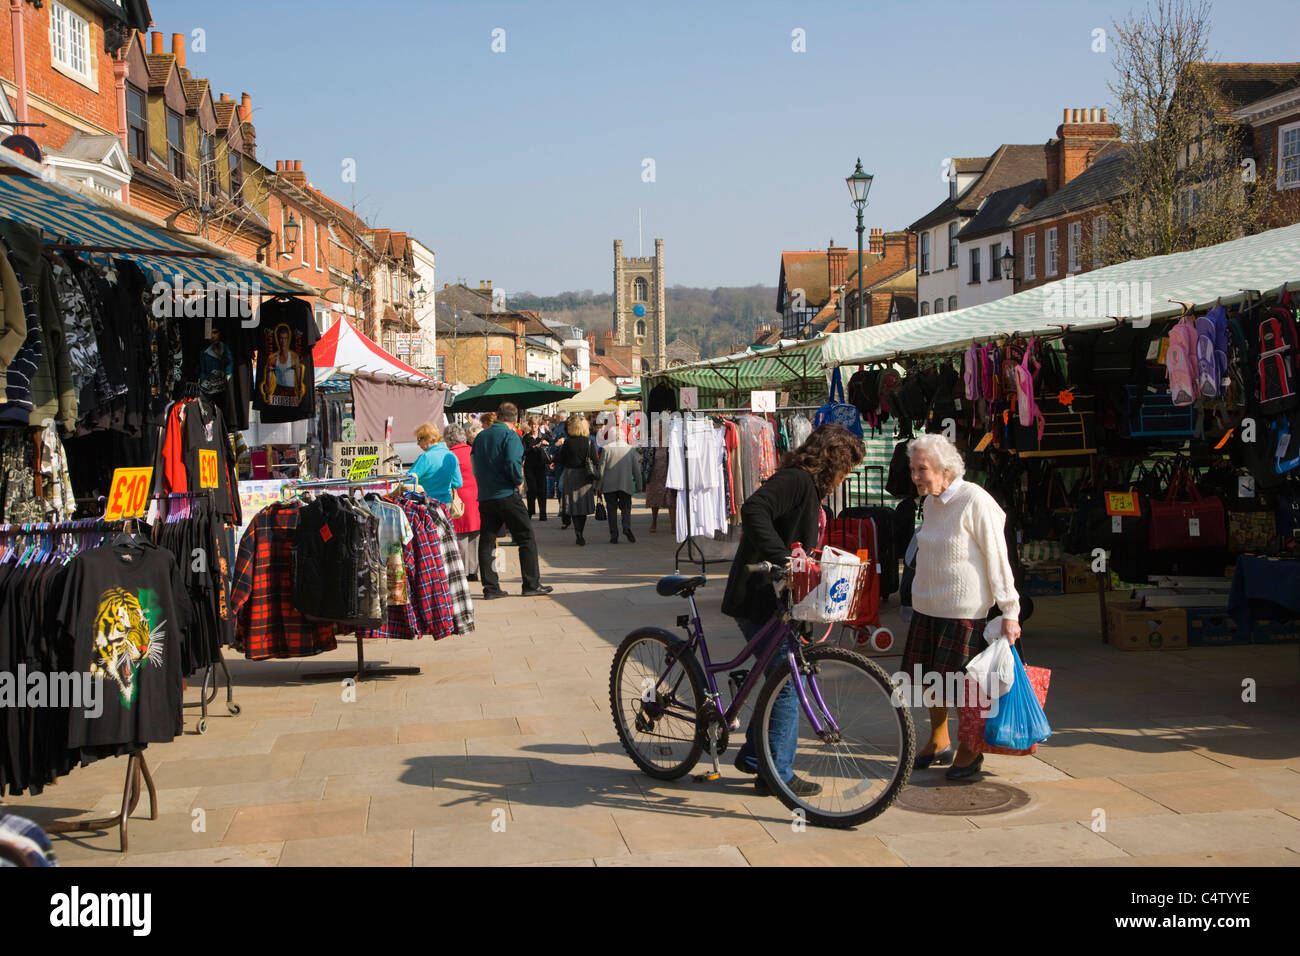 Market at Market Place, Henley-on Thames, Oxfordshire, England, UK Stock Photo